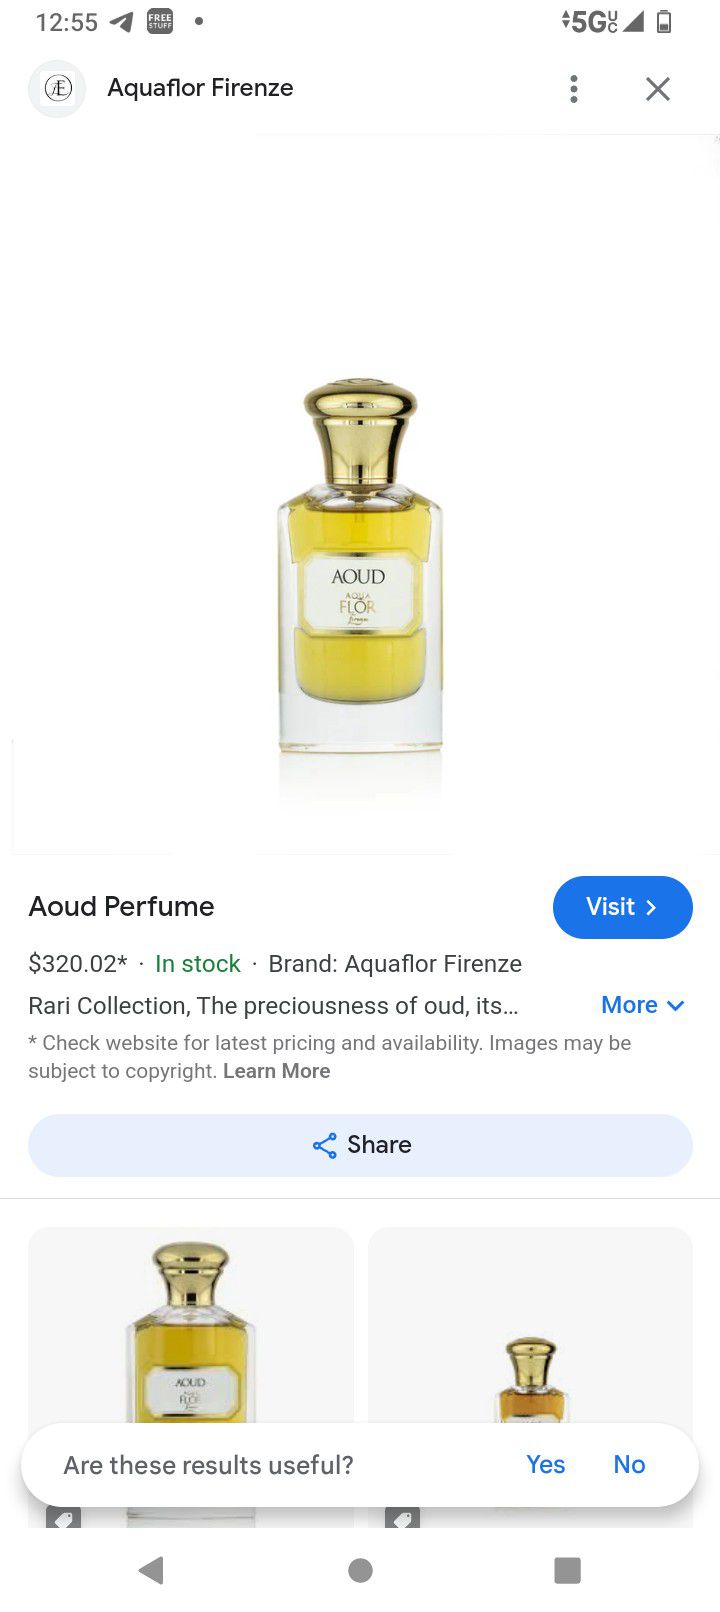 Aqua Flor Firenze Perfume 